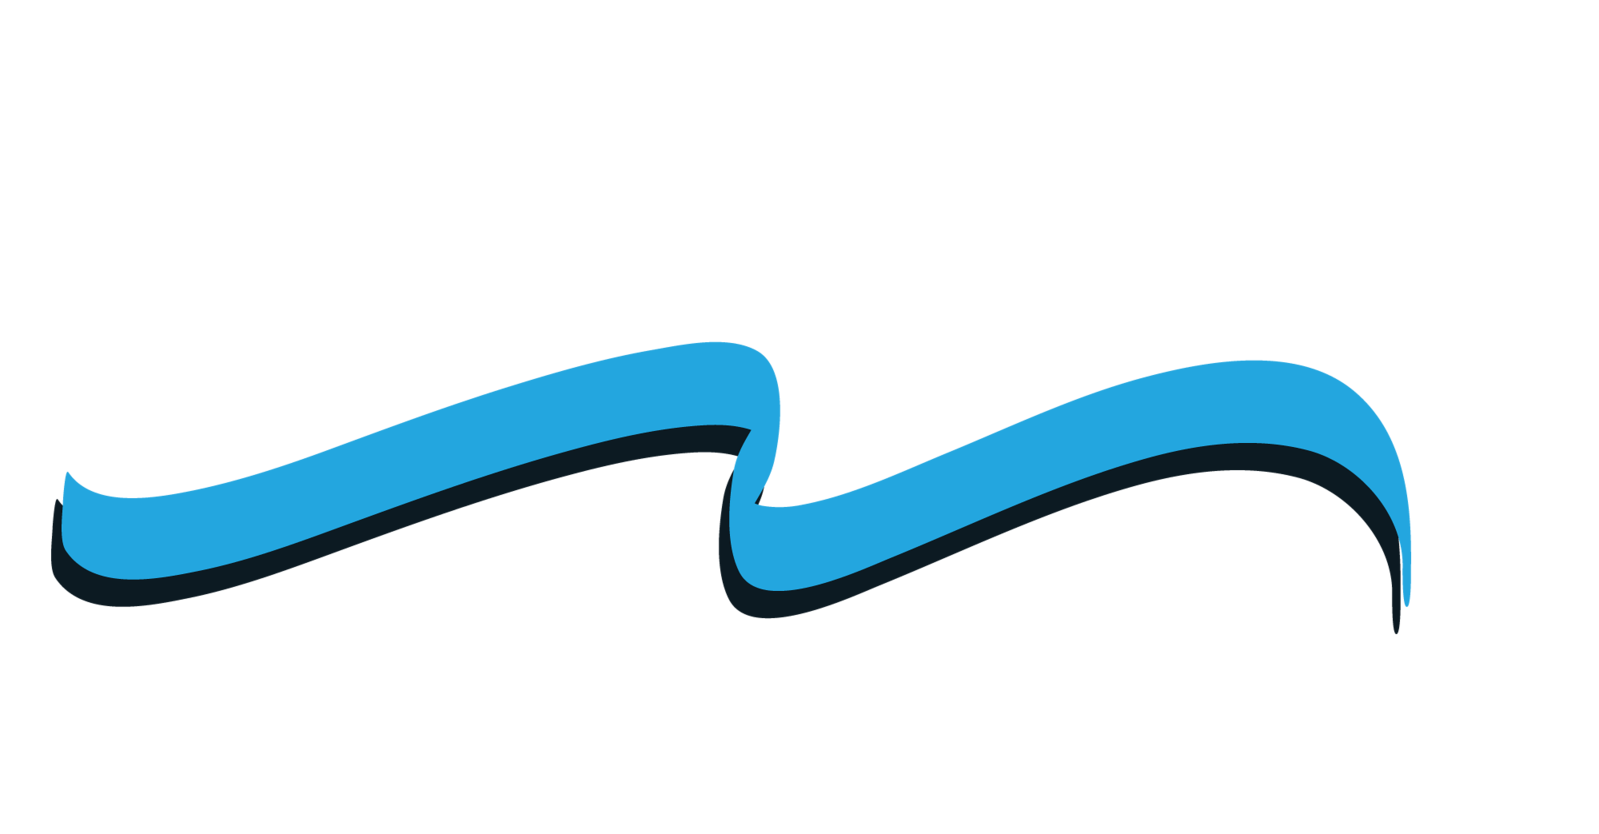 great lakes boat top logo